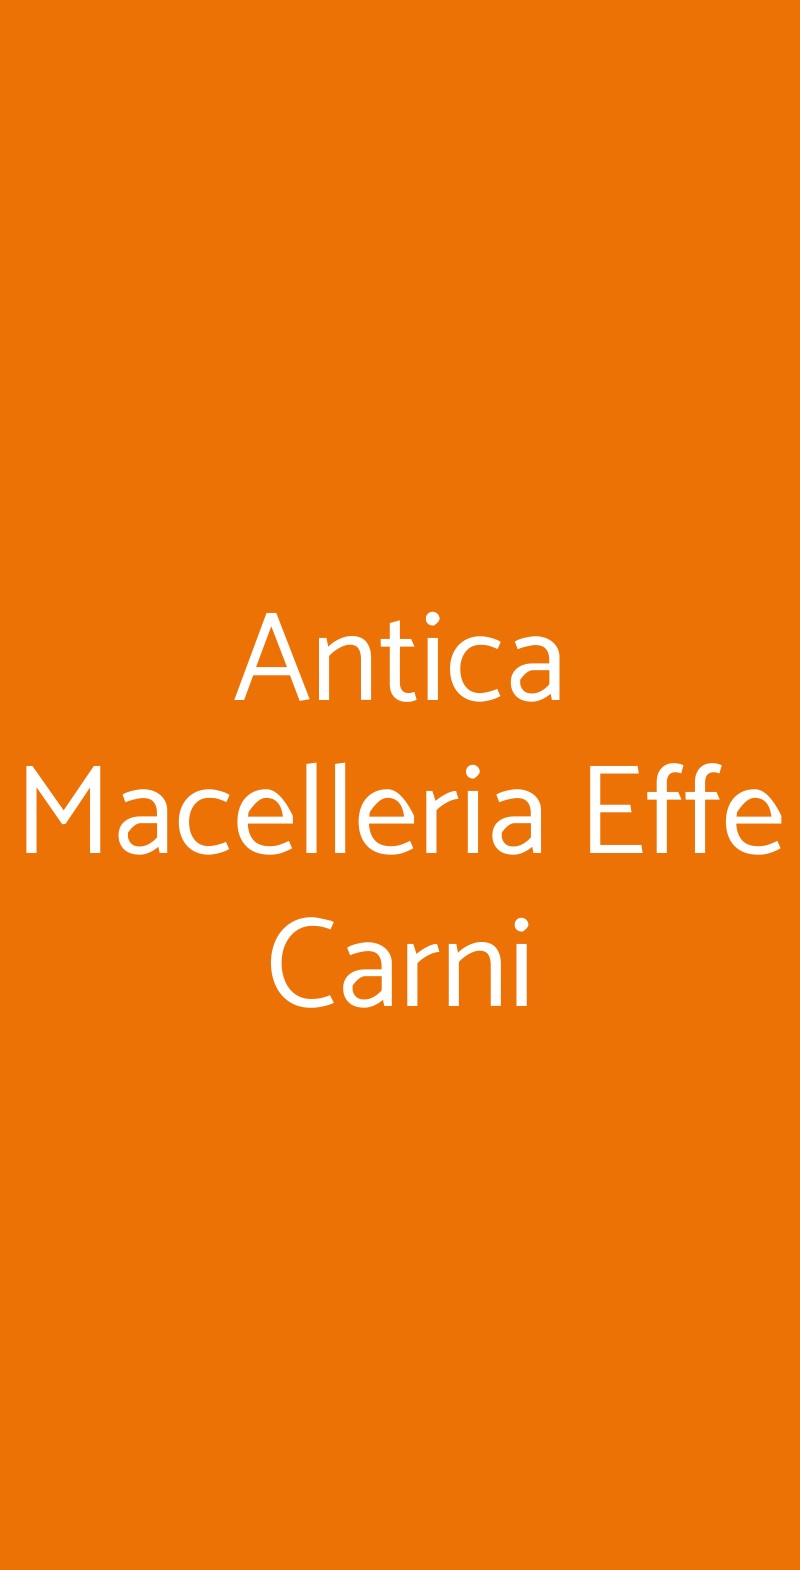 Antica Macelleria Effe Carni Bari menù 1 pagina